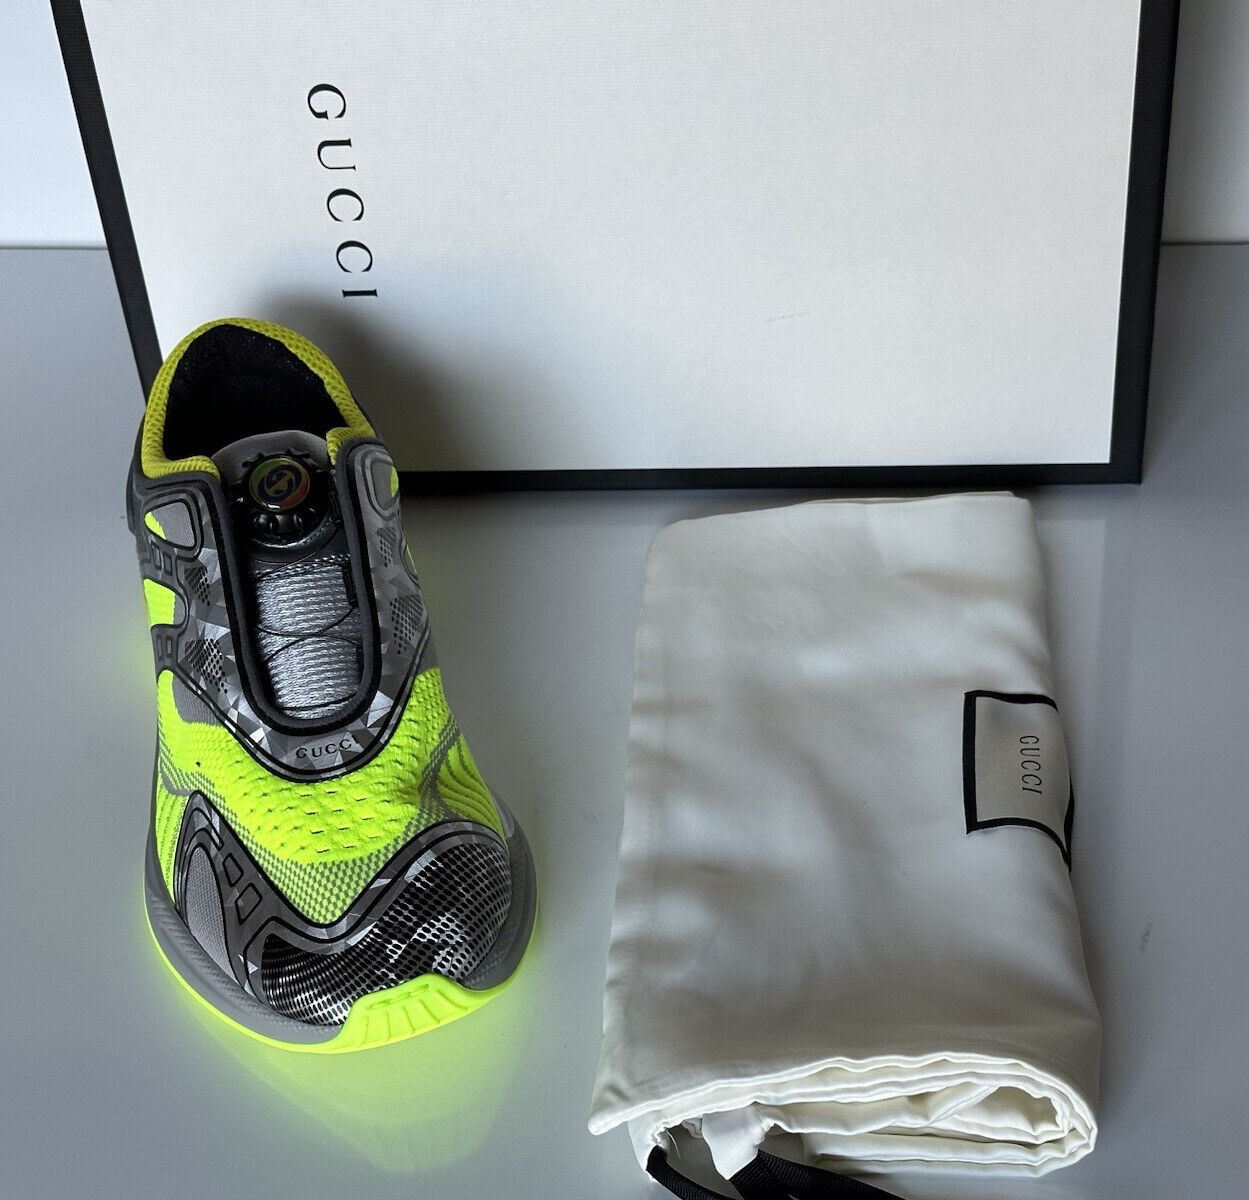 NIB Gucci Ultrapace R Sneakers in Schwarz und Grün 6,5 US (Gucci 6) 620337 IT 